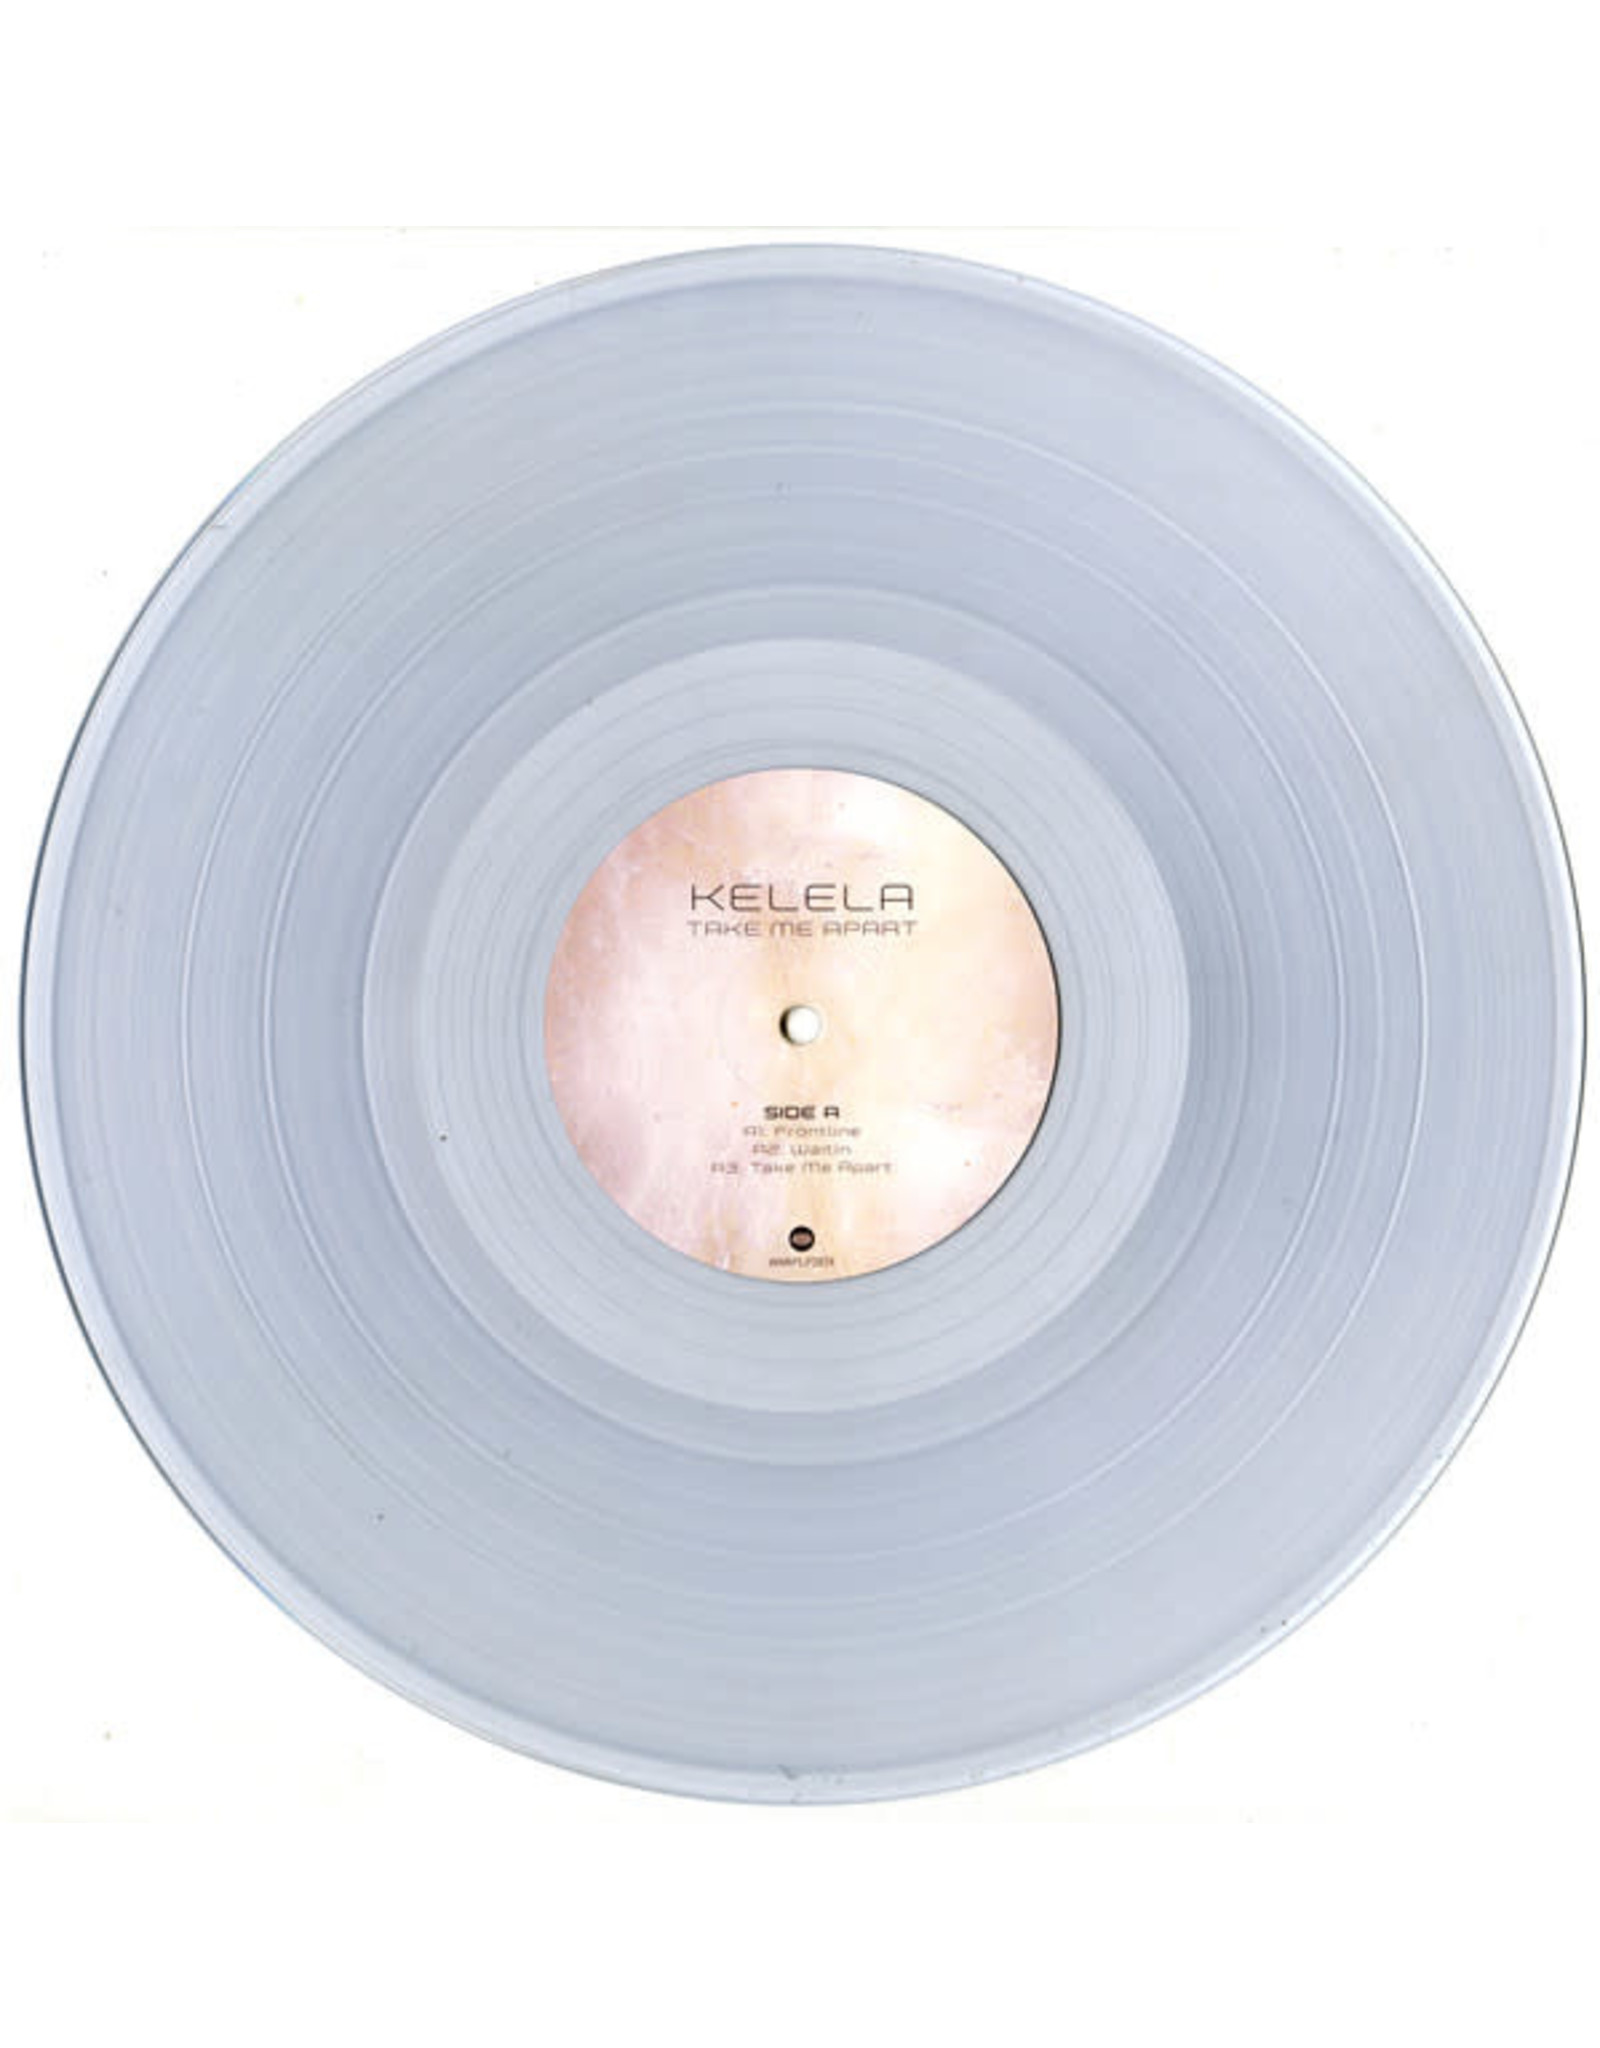 Kelela - Take Me Apart (Clear Vinyl)